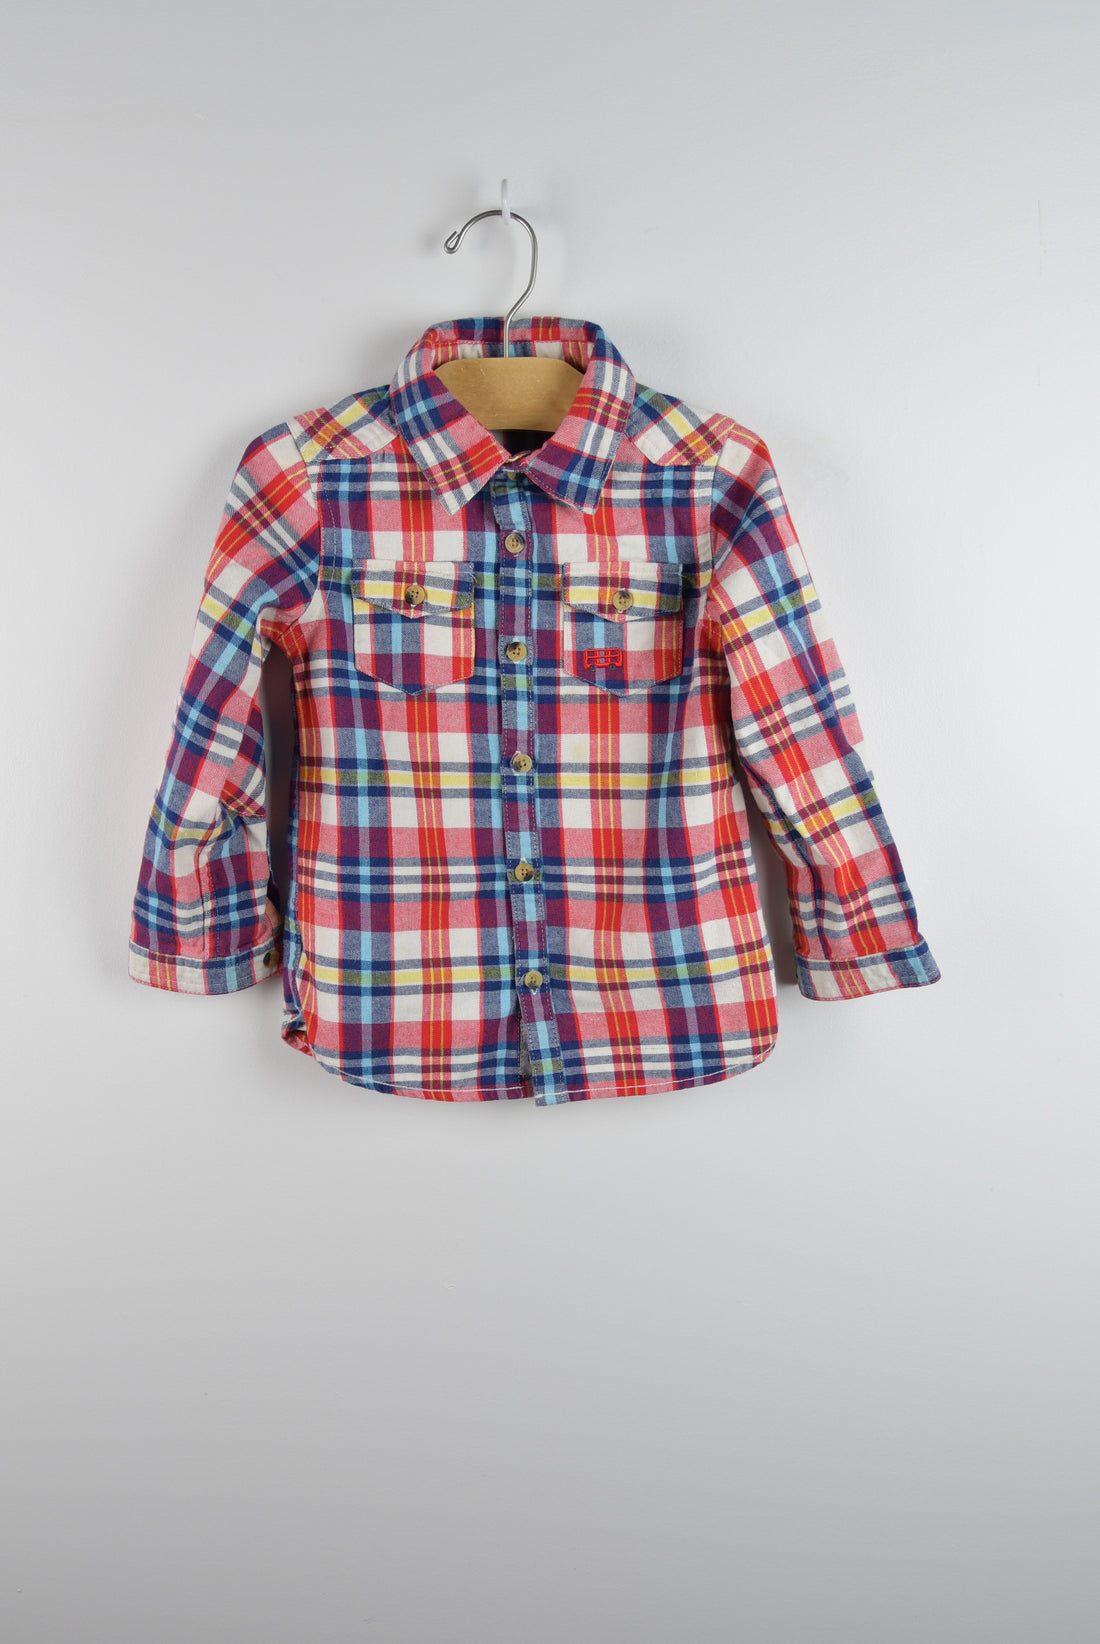 Cath Kid Plaid Flannel Shirt (3-4T)